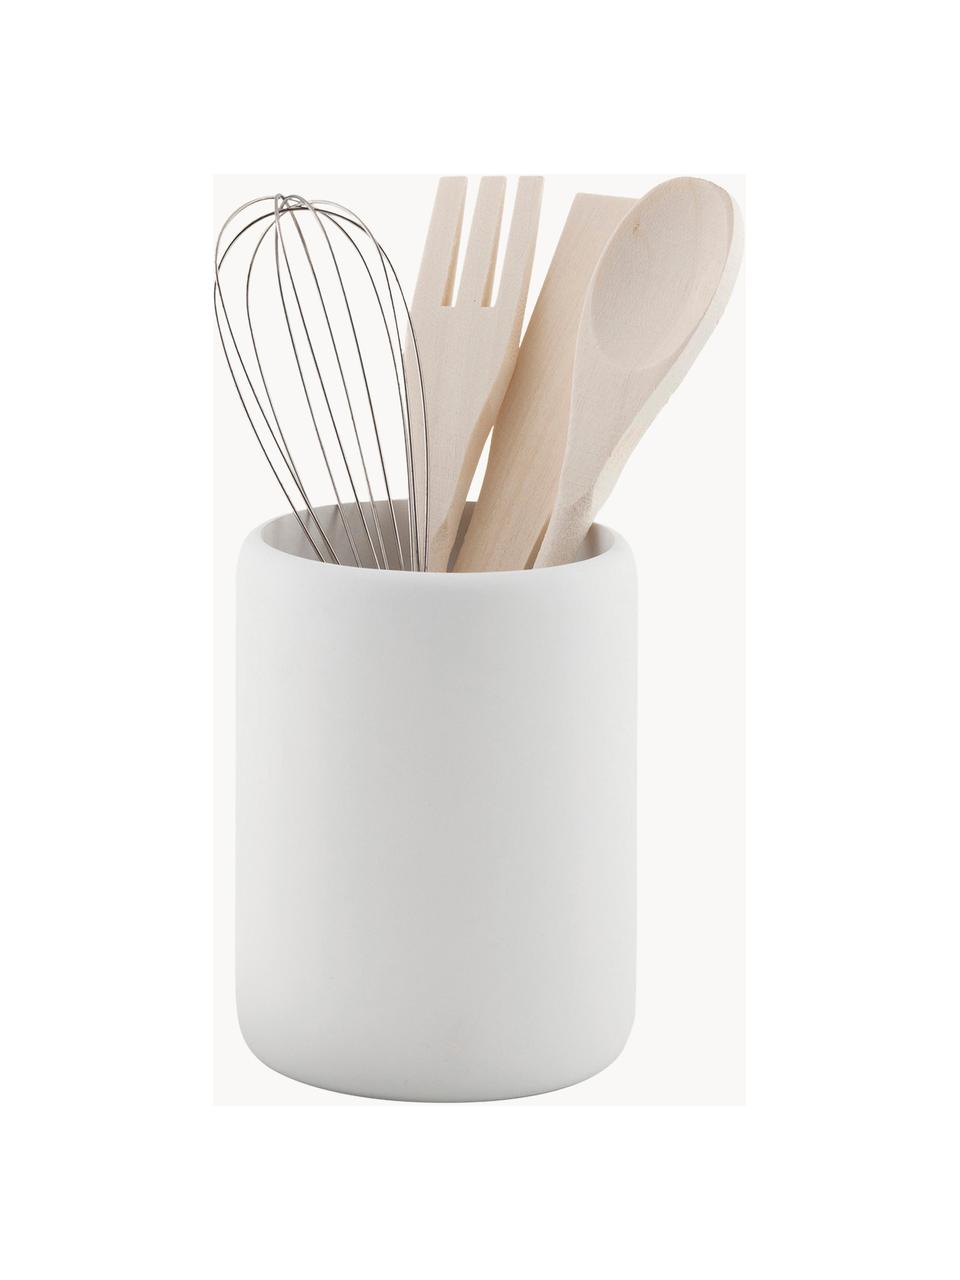 Set utensili da cucina Botta 5 pz, Contenitore: poliresina, Bianco, legno chiaro, Ø 11 x Alt. 23 cm